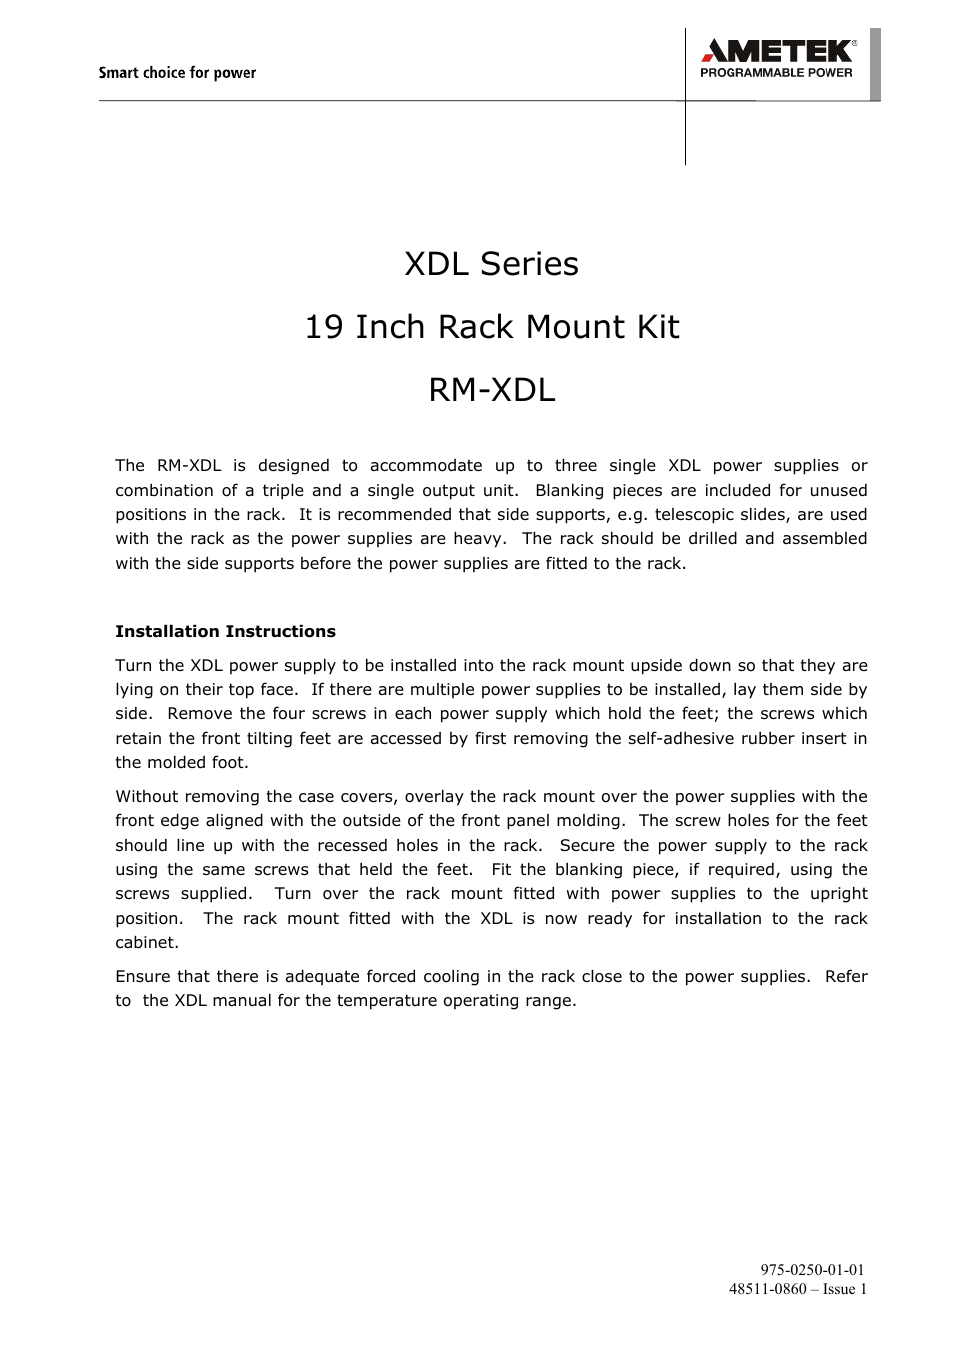 XDL Series II Rack Mount Kit Instructions